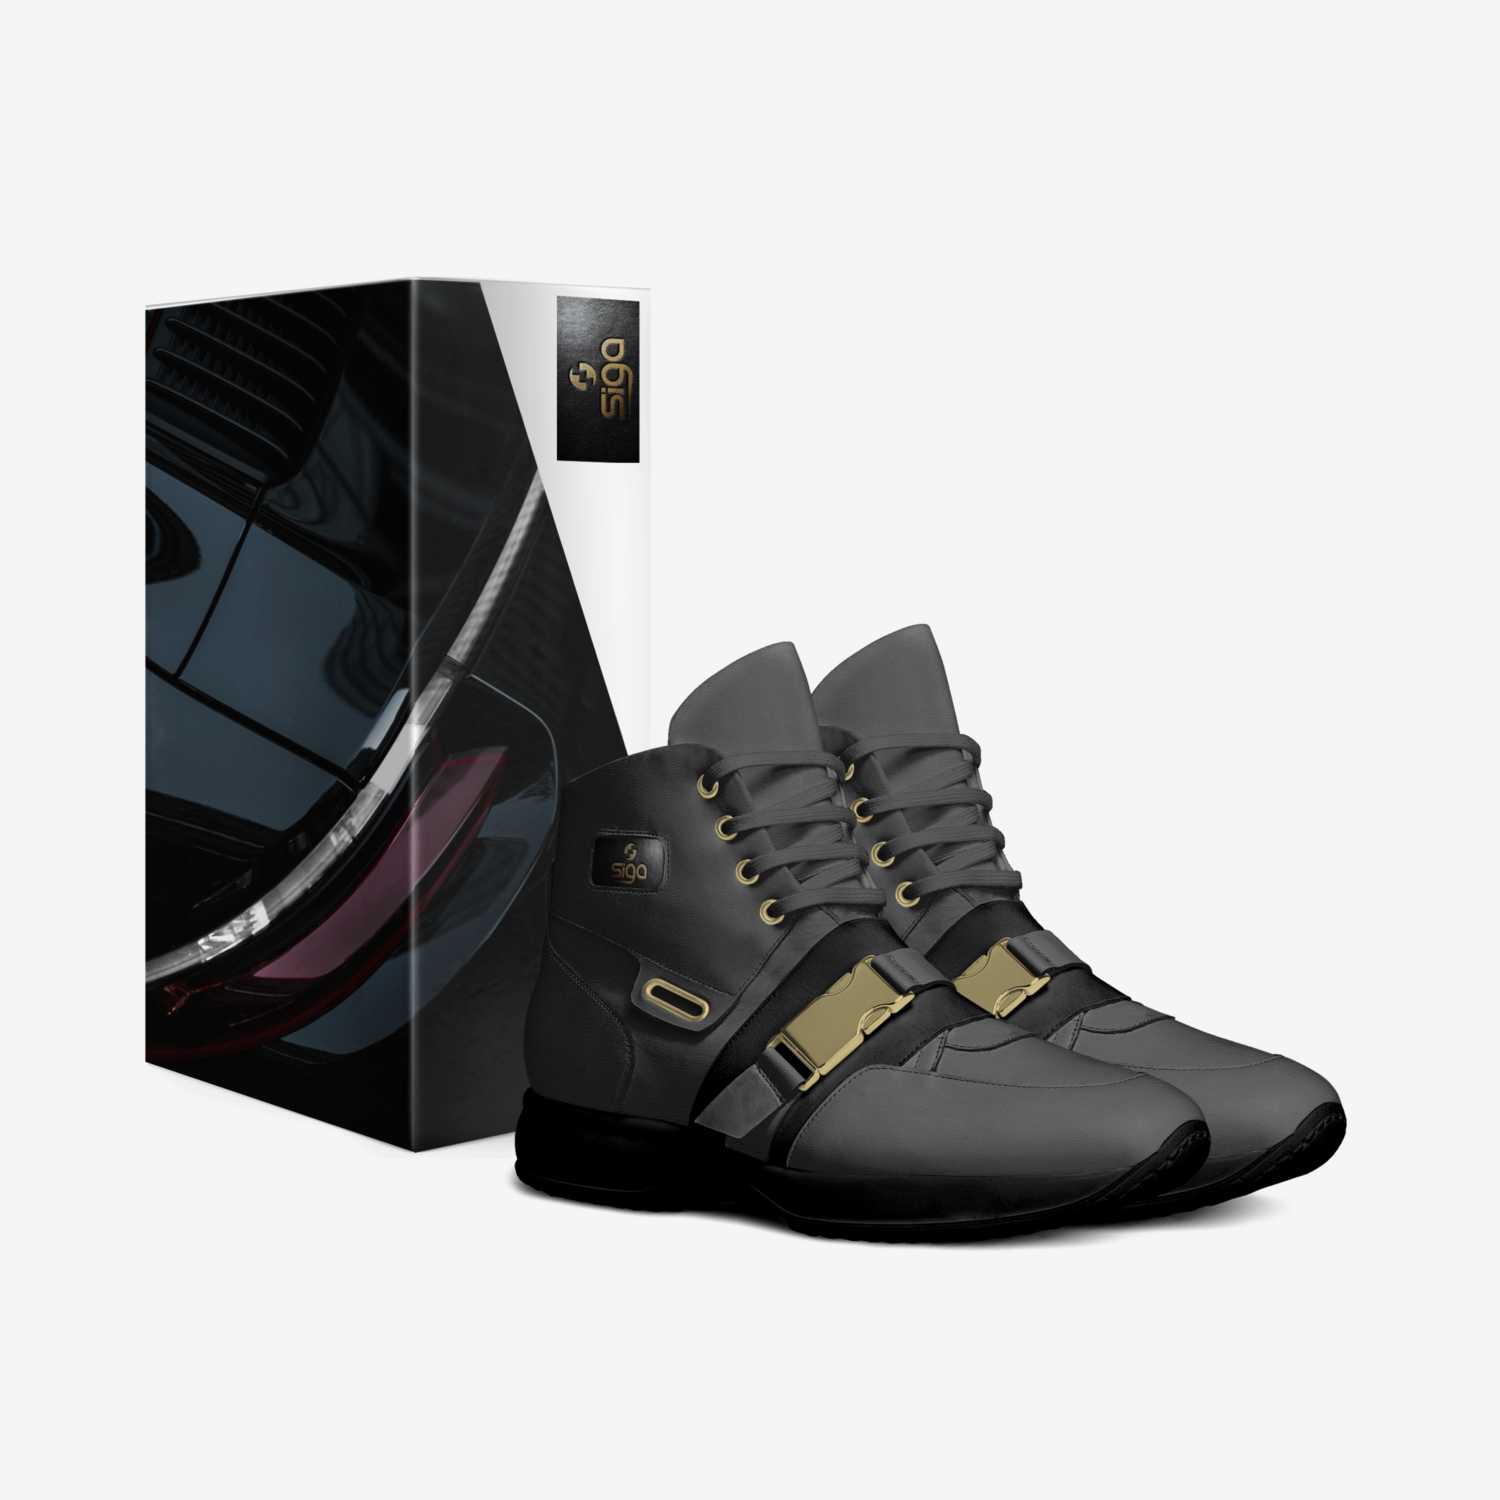 SIGA  custom made in Italy shoes by Nondumiso Mabaso | Box view